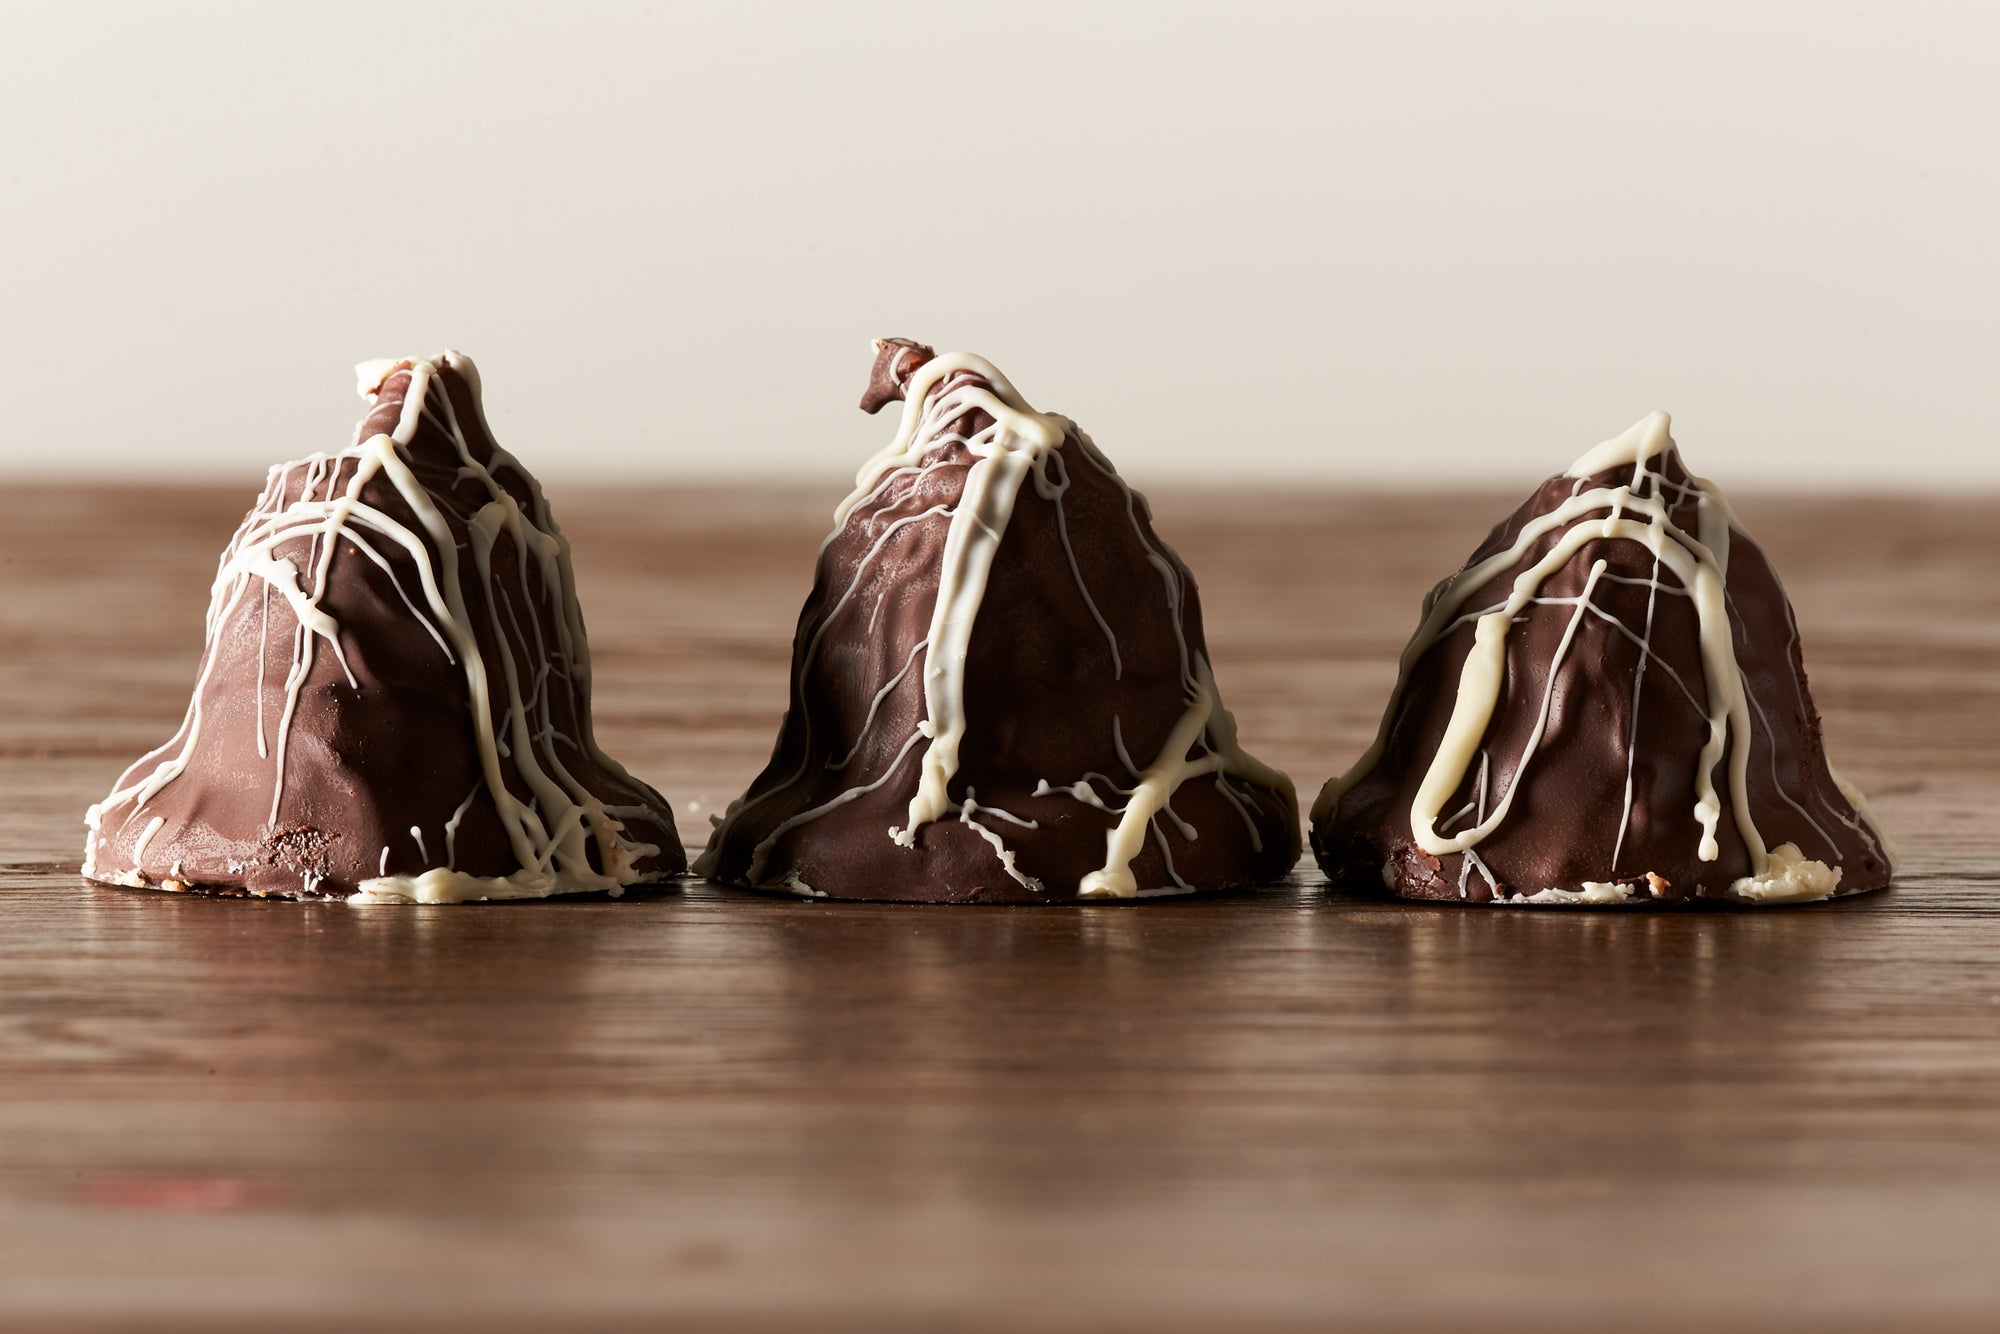 Conitos Dulce de Leche Truffles: Dark Chocolate Wooden Table Baking Co.